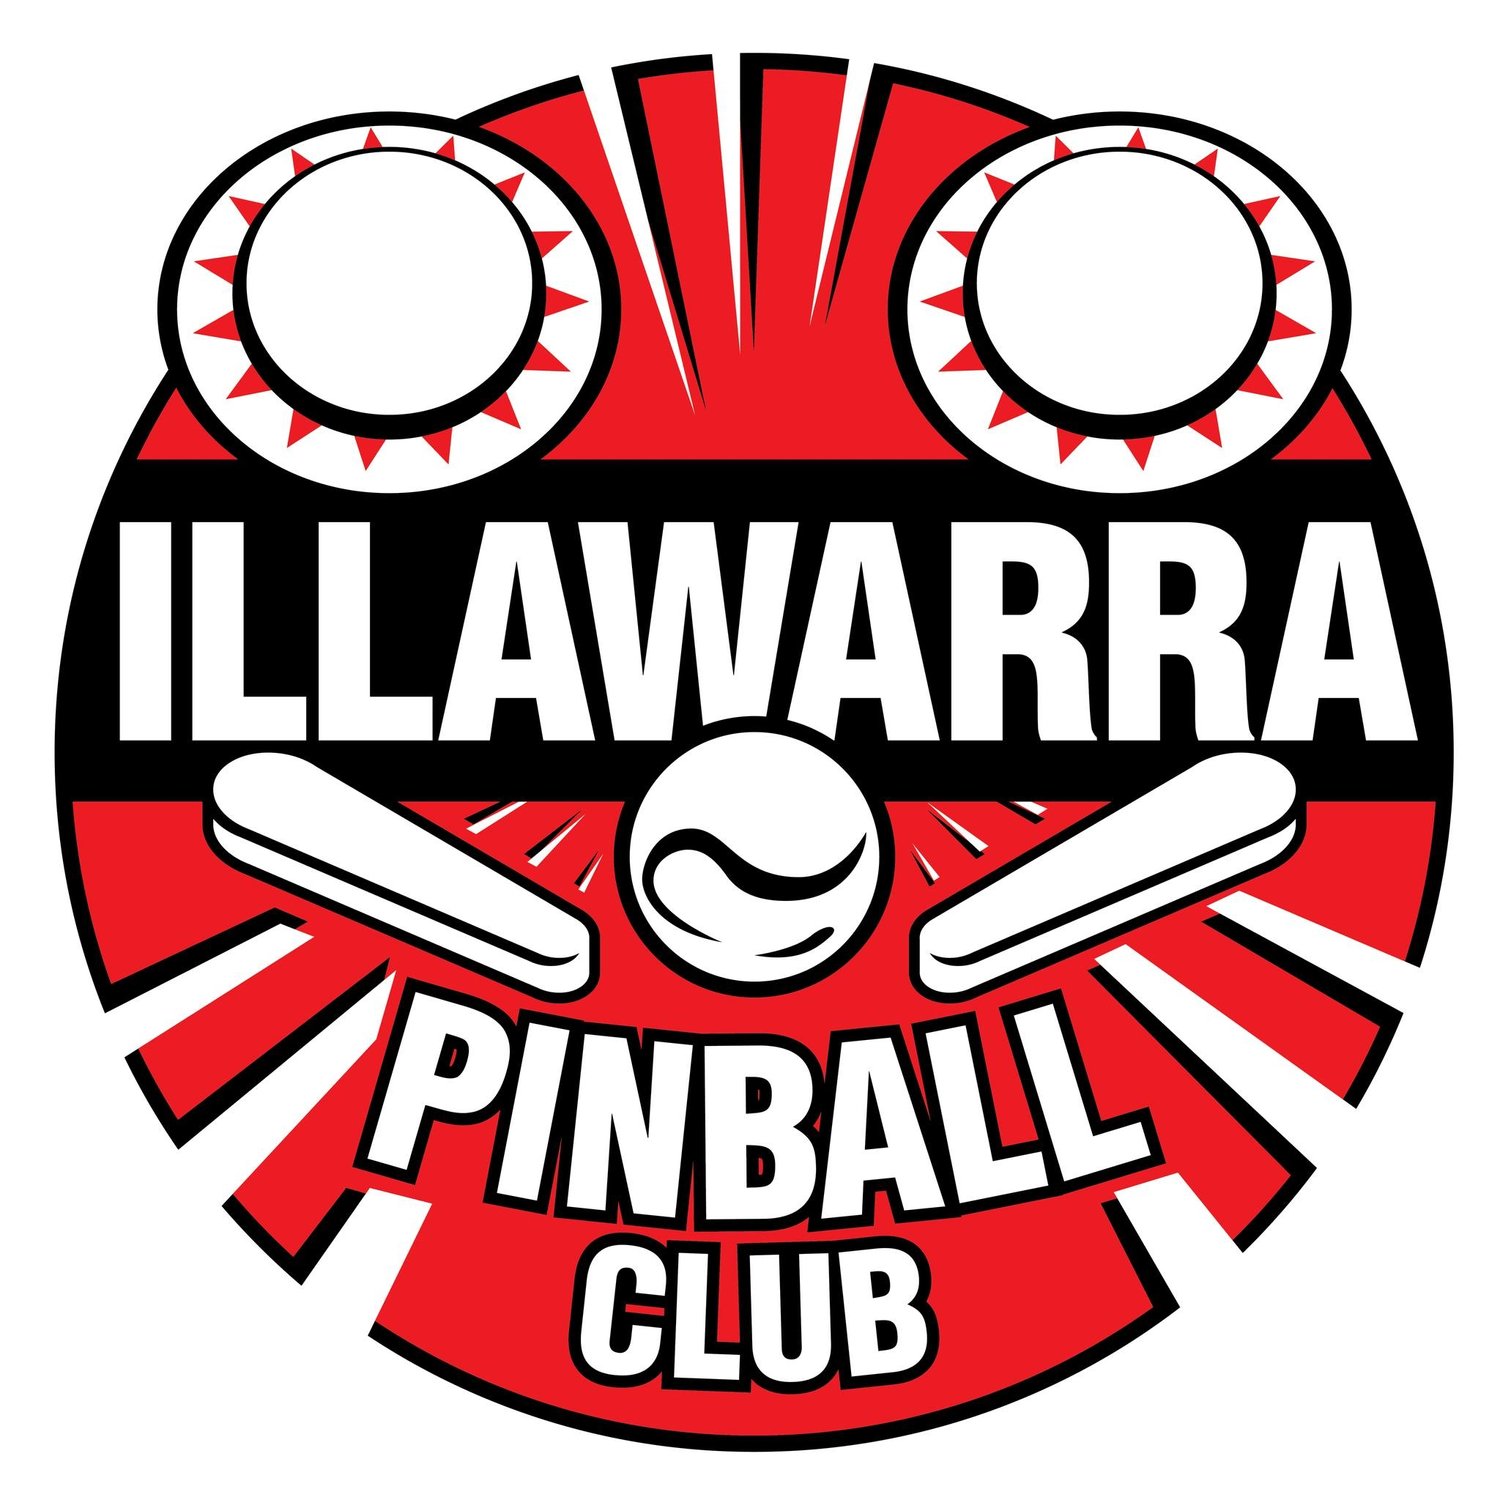 Illawarra Pinball